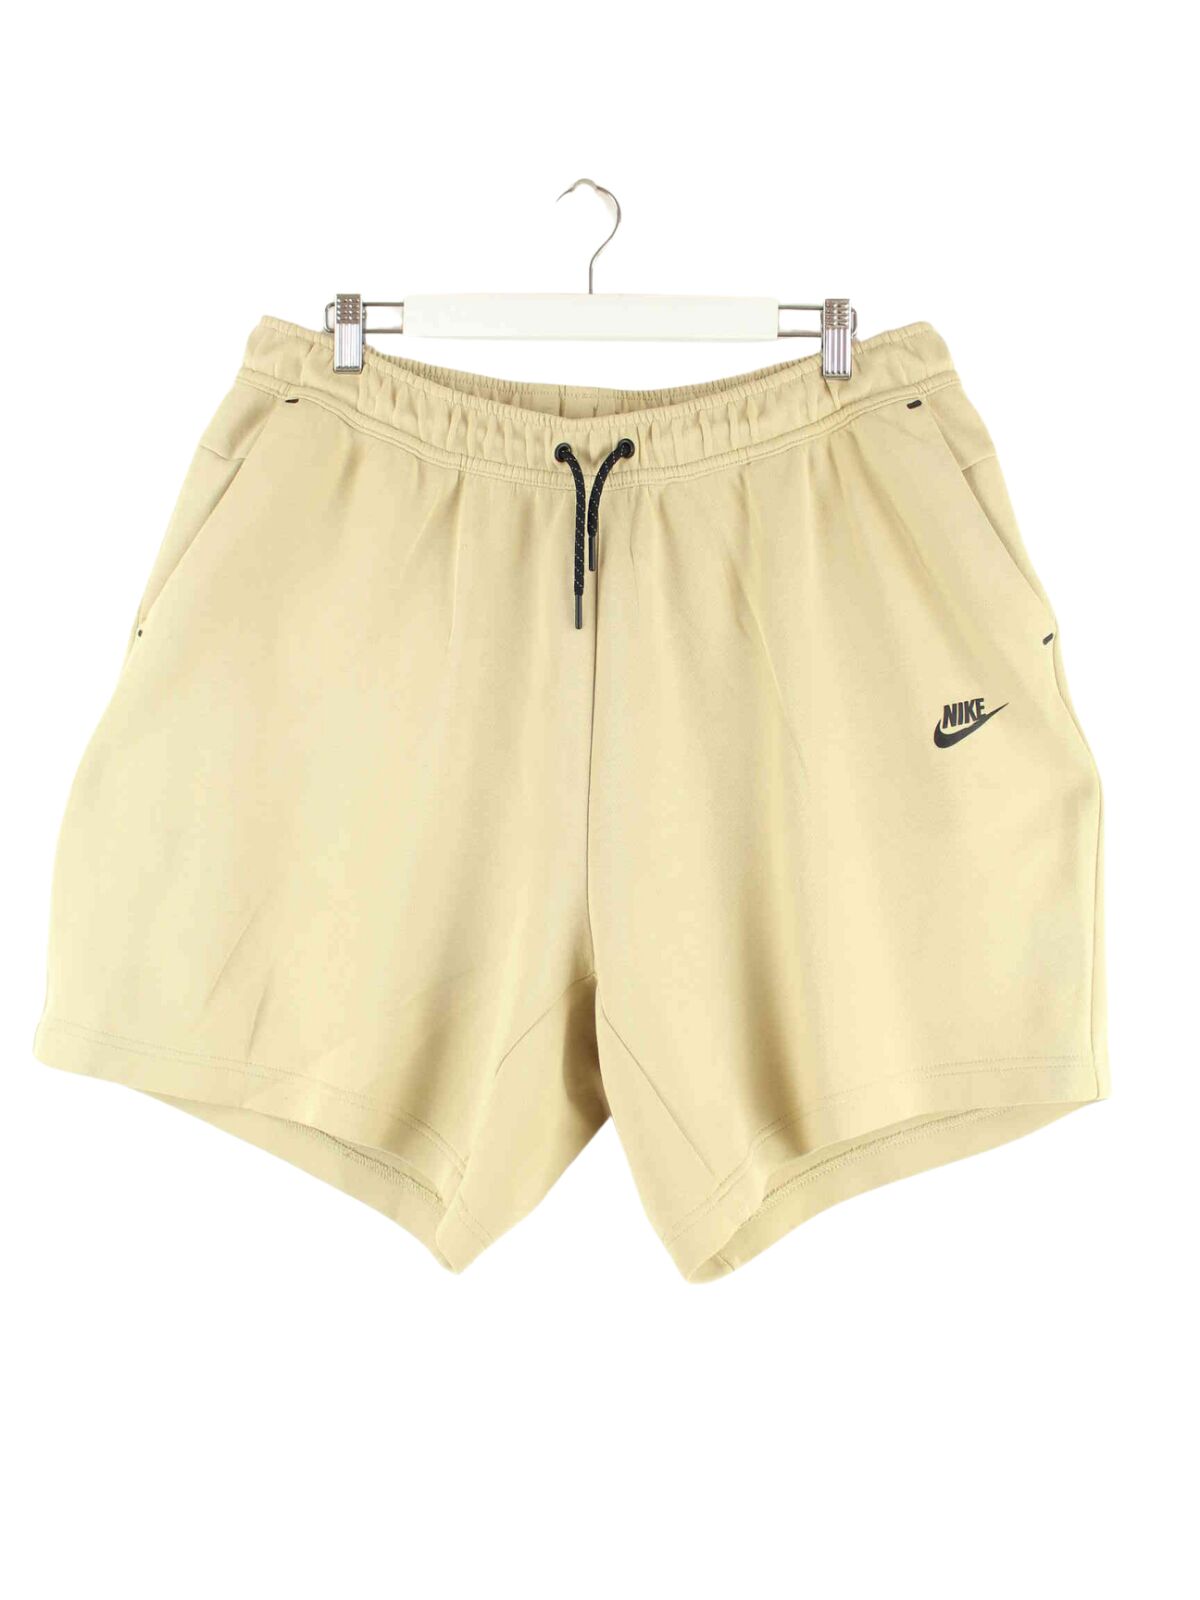 Nike Shorts Beige XL (front image)